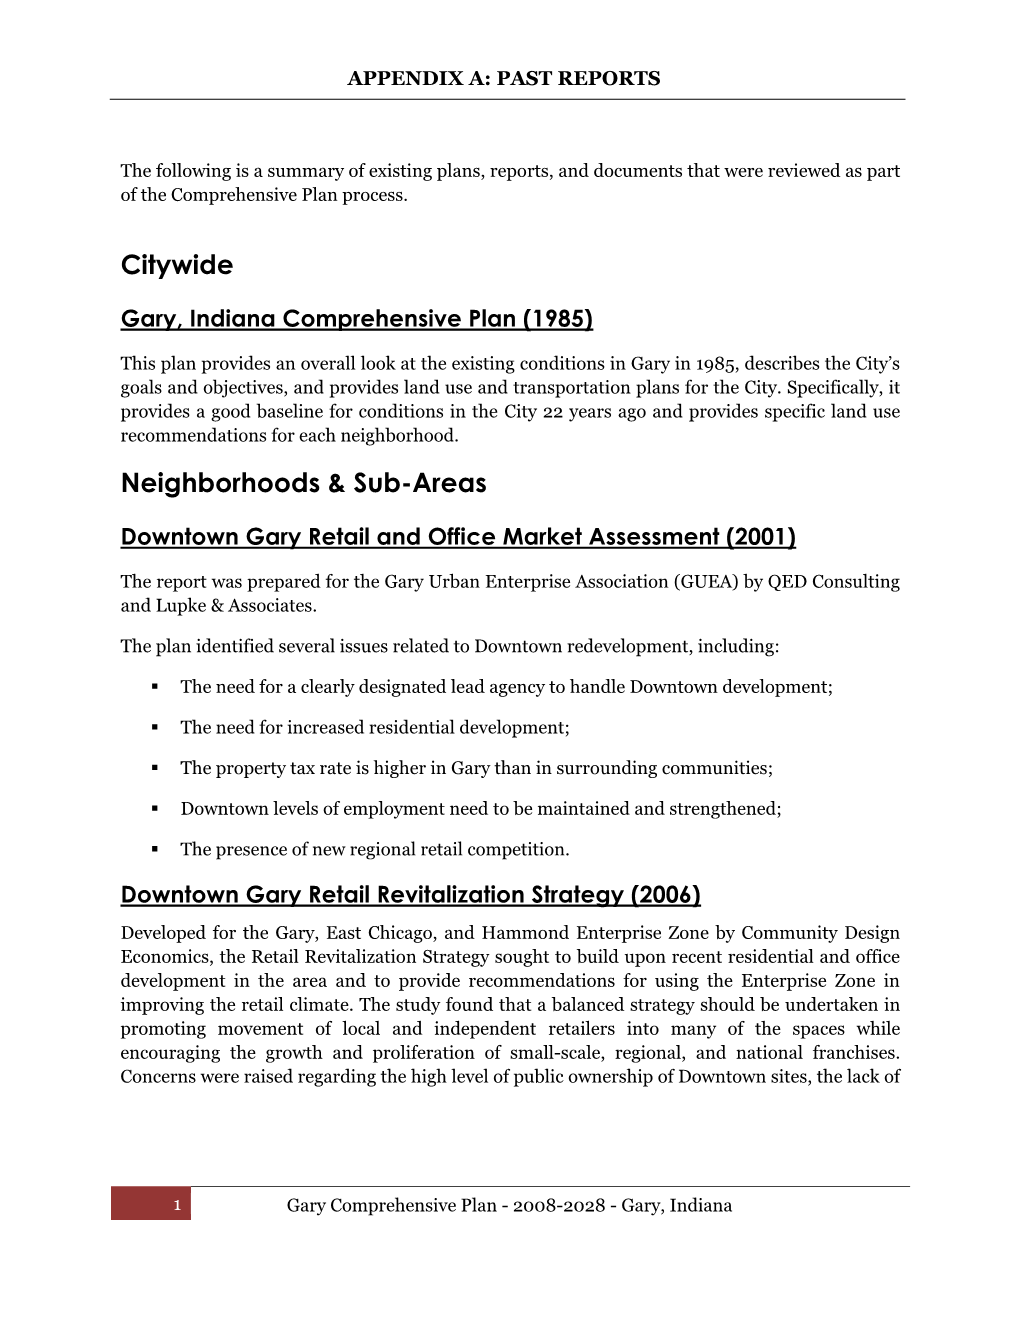 Citywide Neighborhoods & Sub-Areas